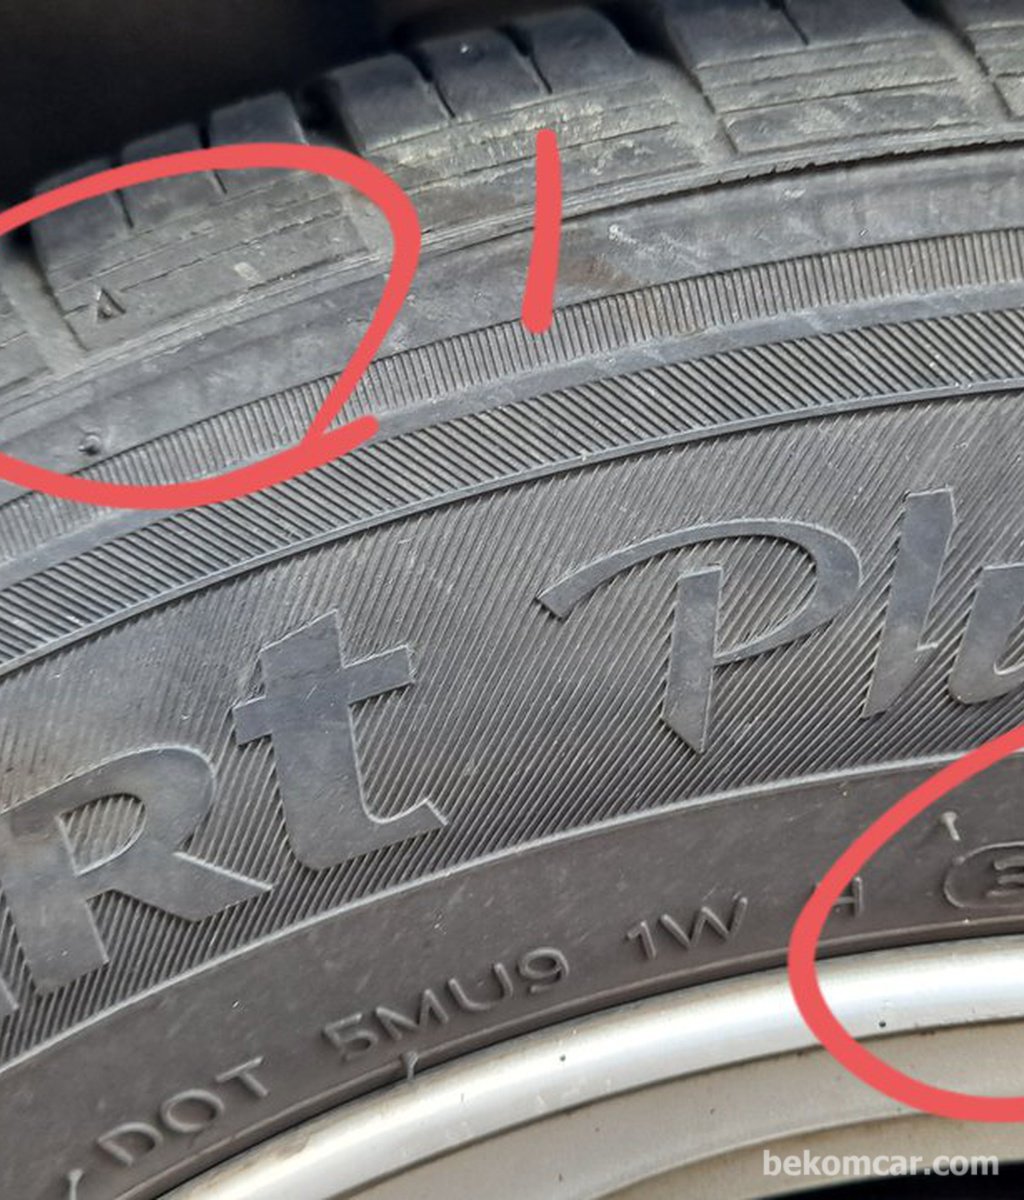 How to check tire production date code|bekomcar.com